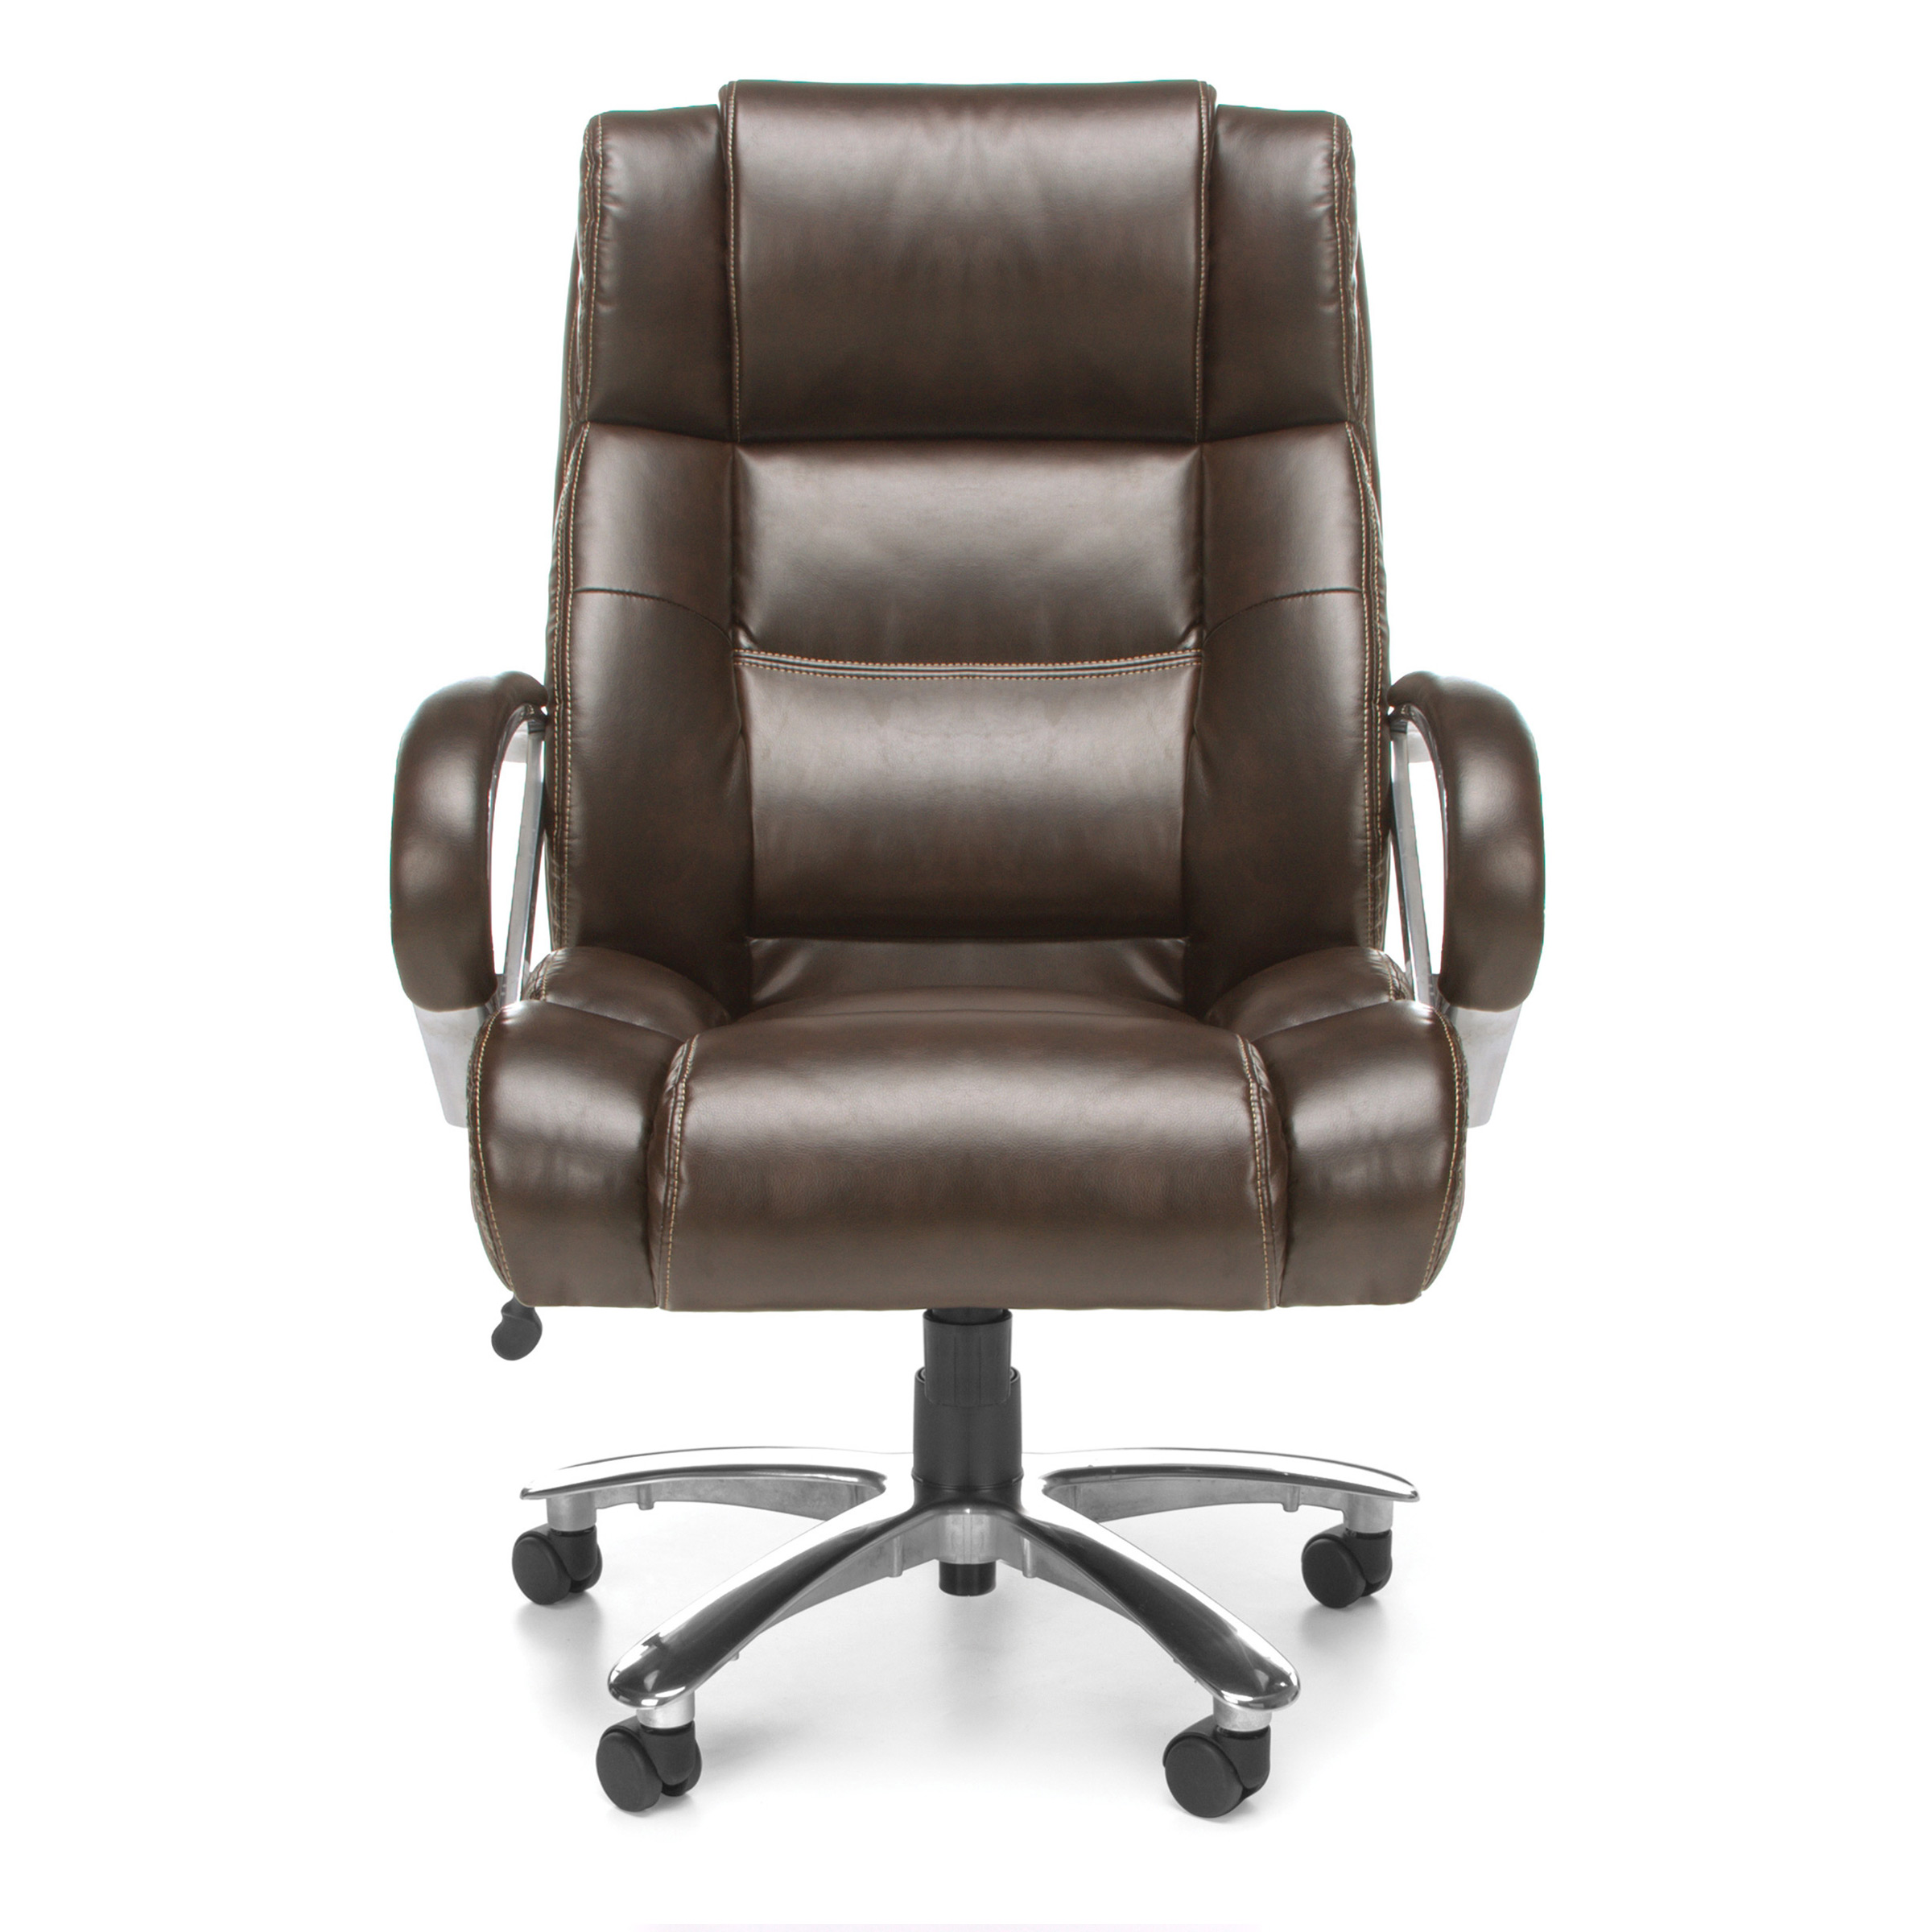 500 lb capacity office chair cub 810 lx 810 brown mfo